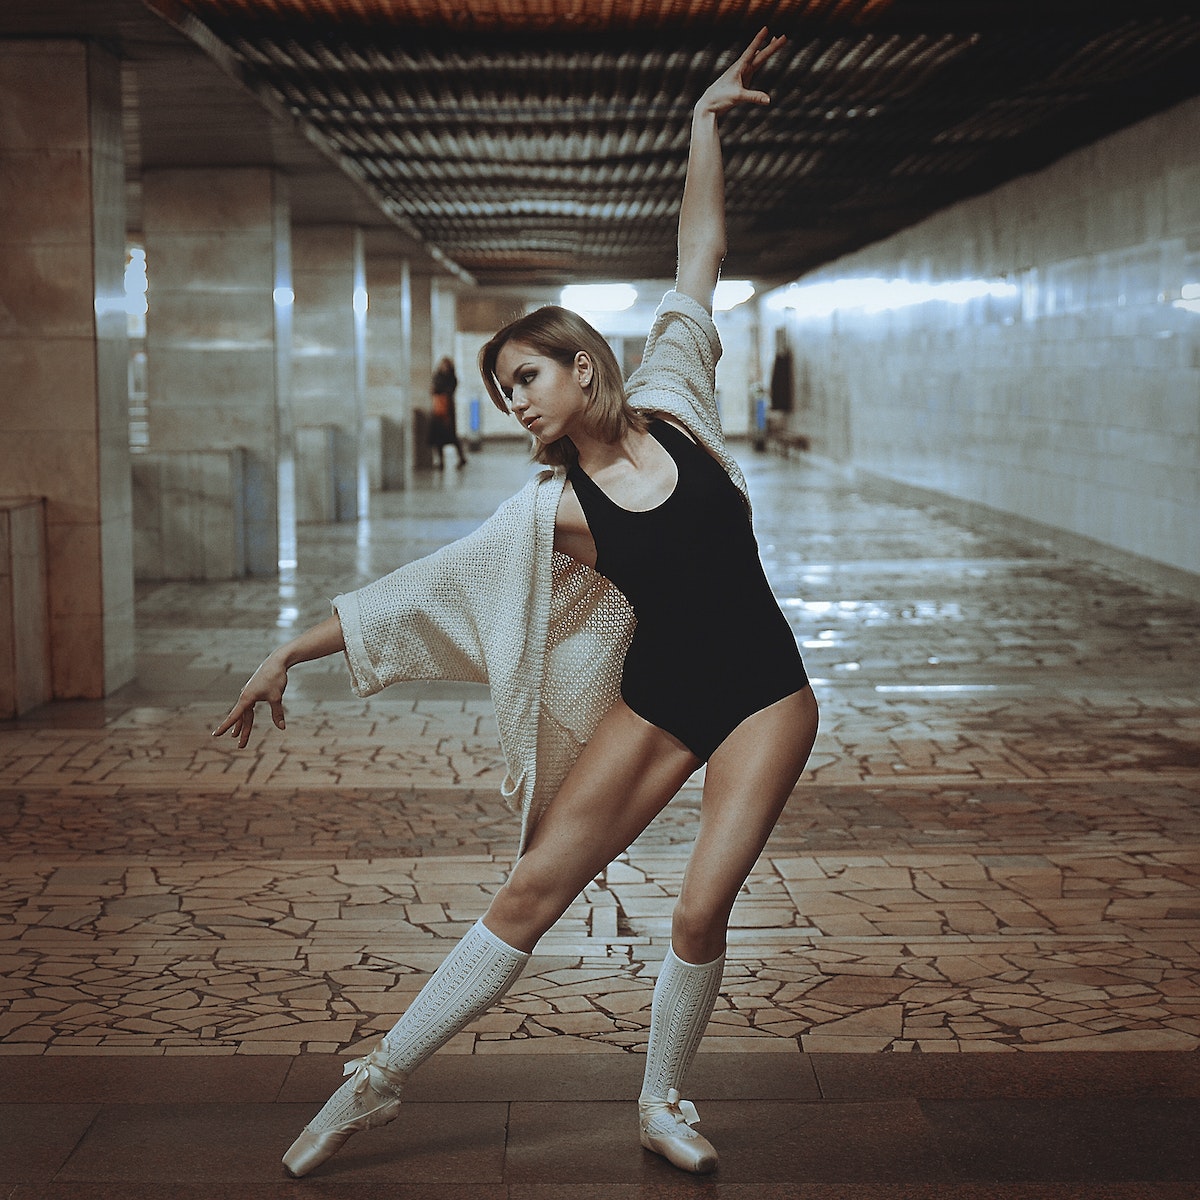 Woman Doing Ballet Pose